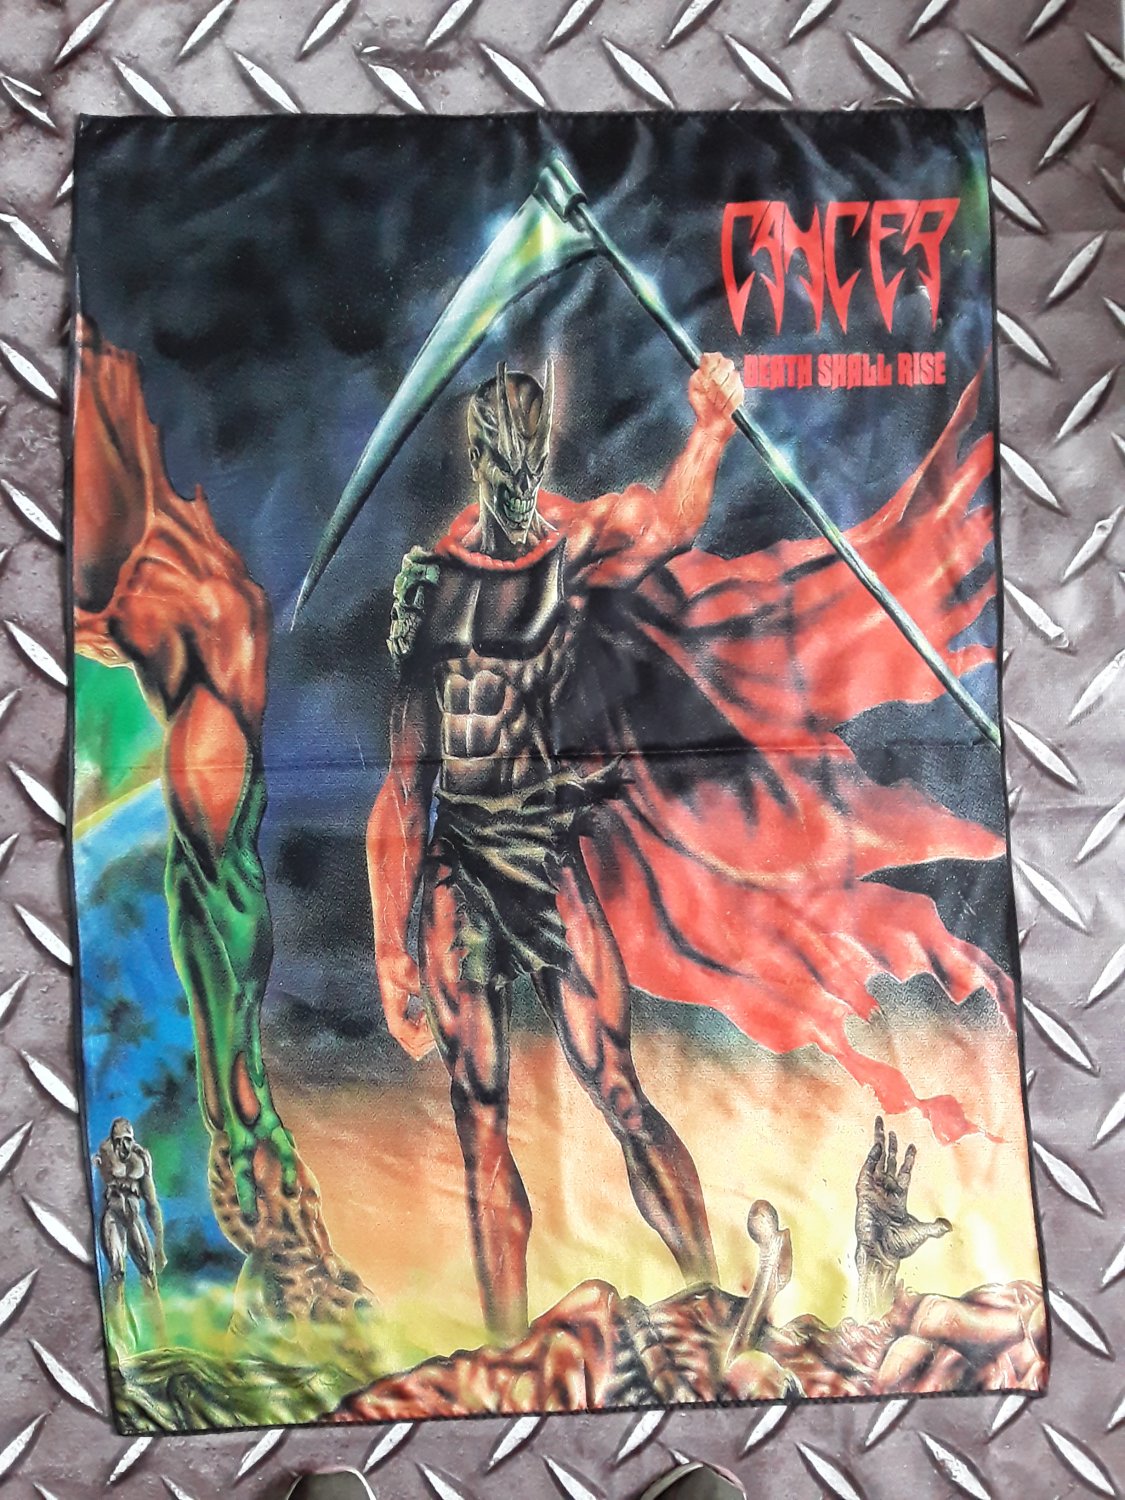 CANCER - Death shall rise FLAG cloth poster banner Old school Death metal Morbid angel